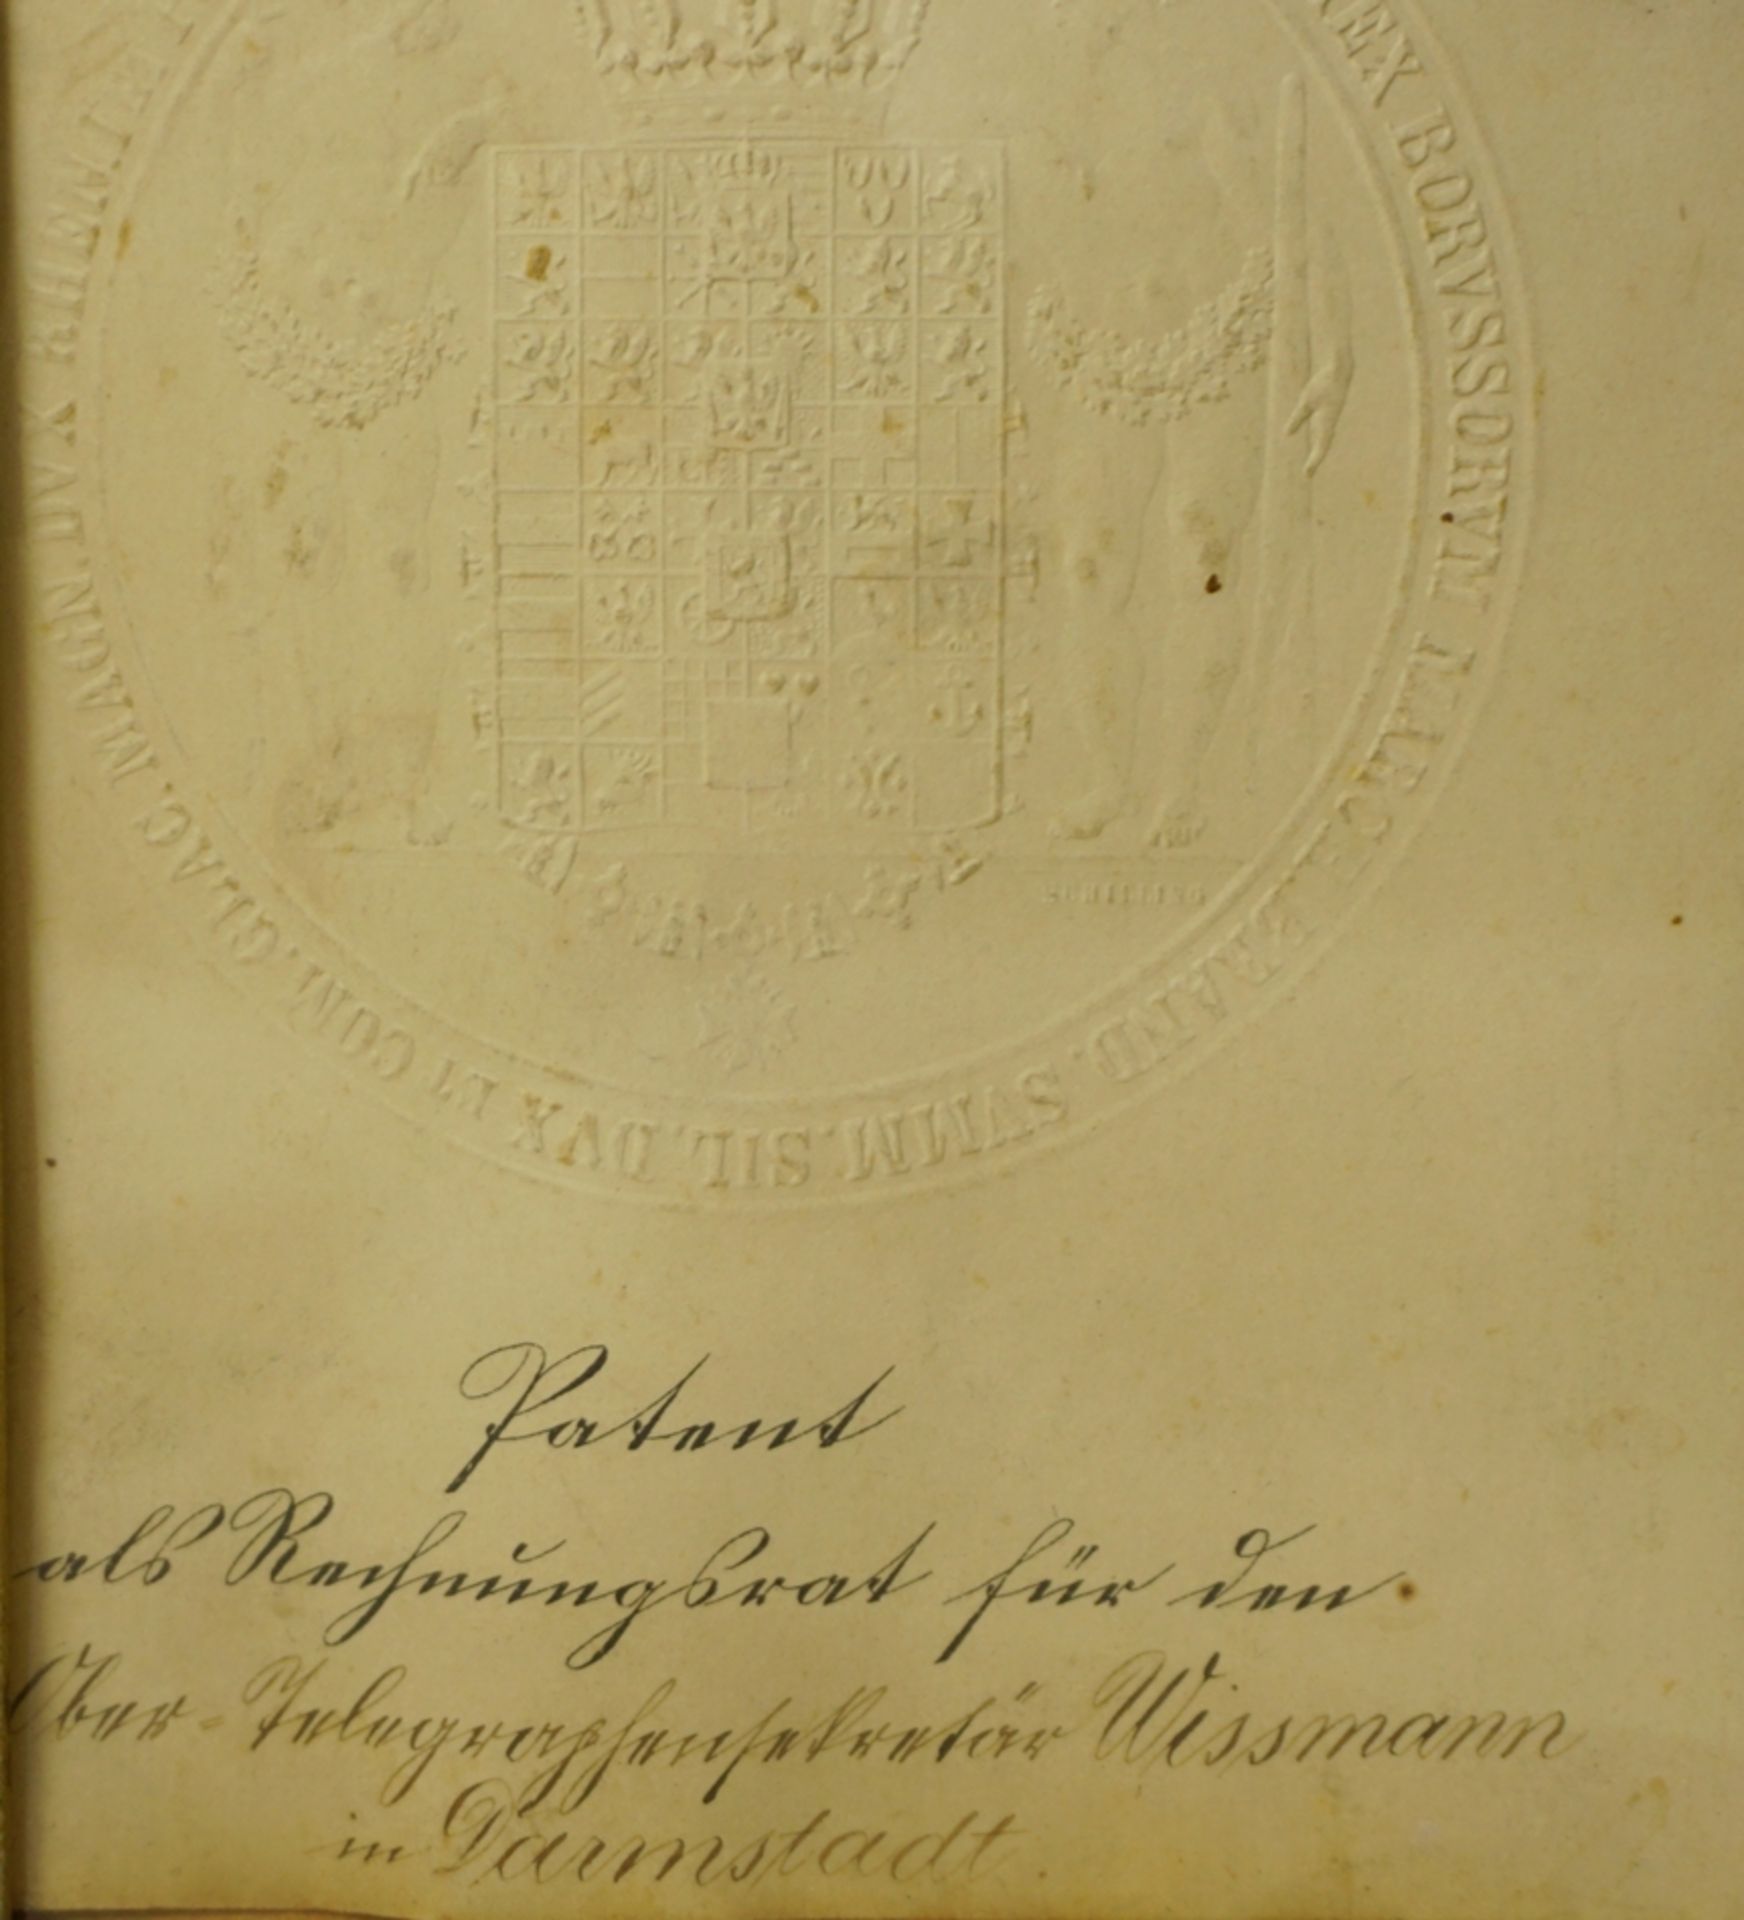 Preussen, Patent- Urkunde, Berlin, den 11. Dezember 1916 - Image 3 of 3